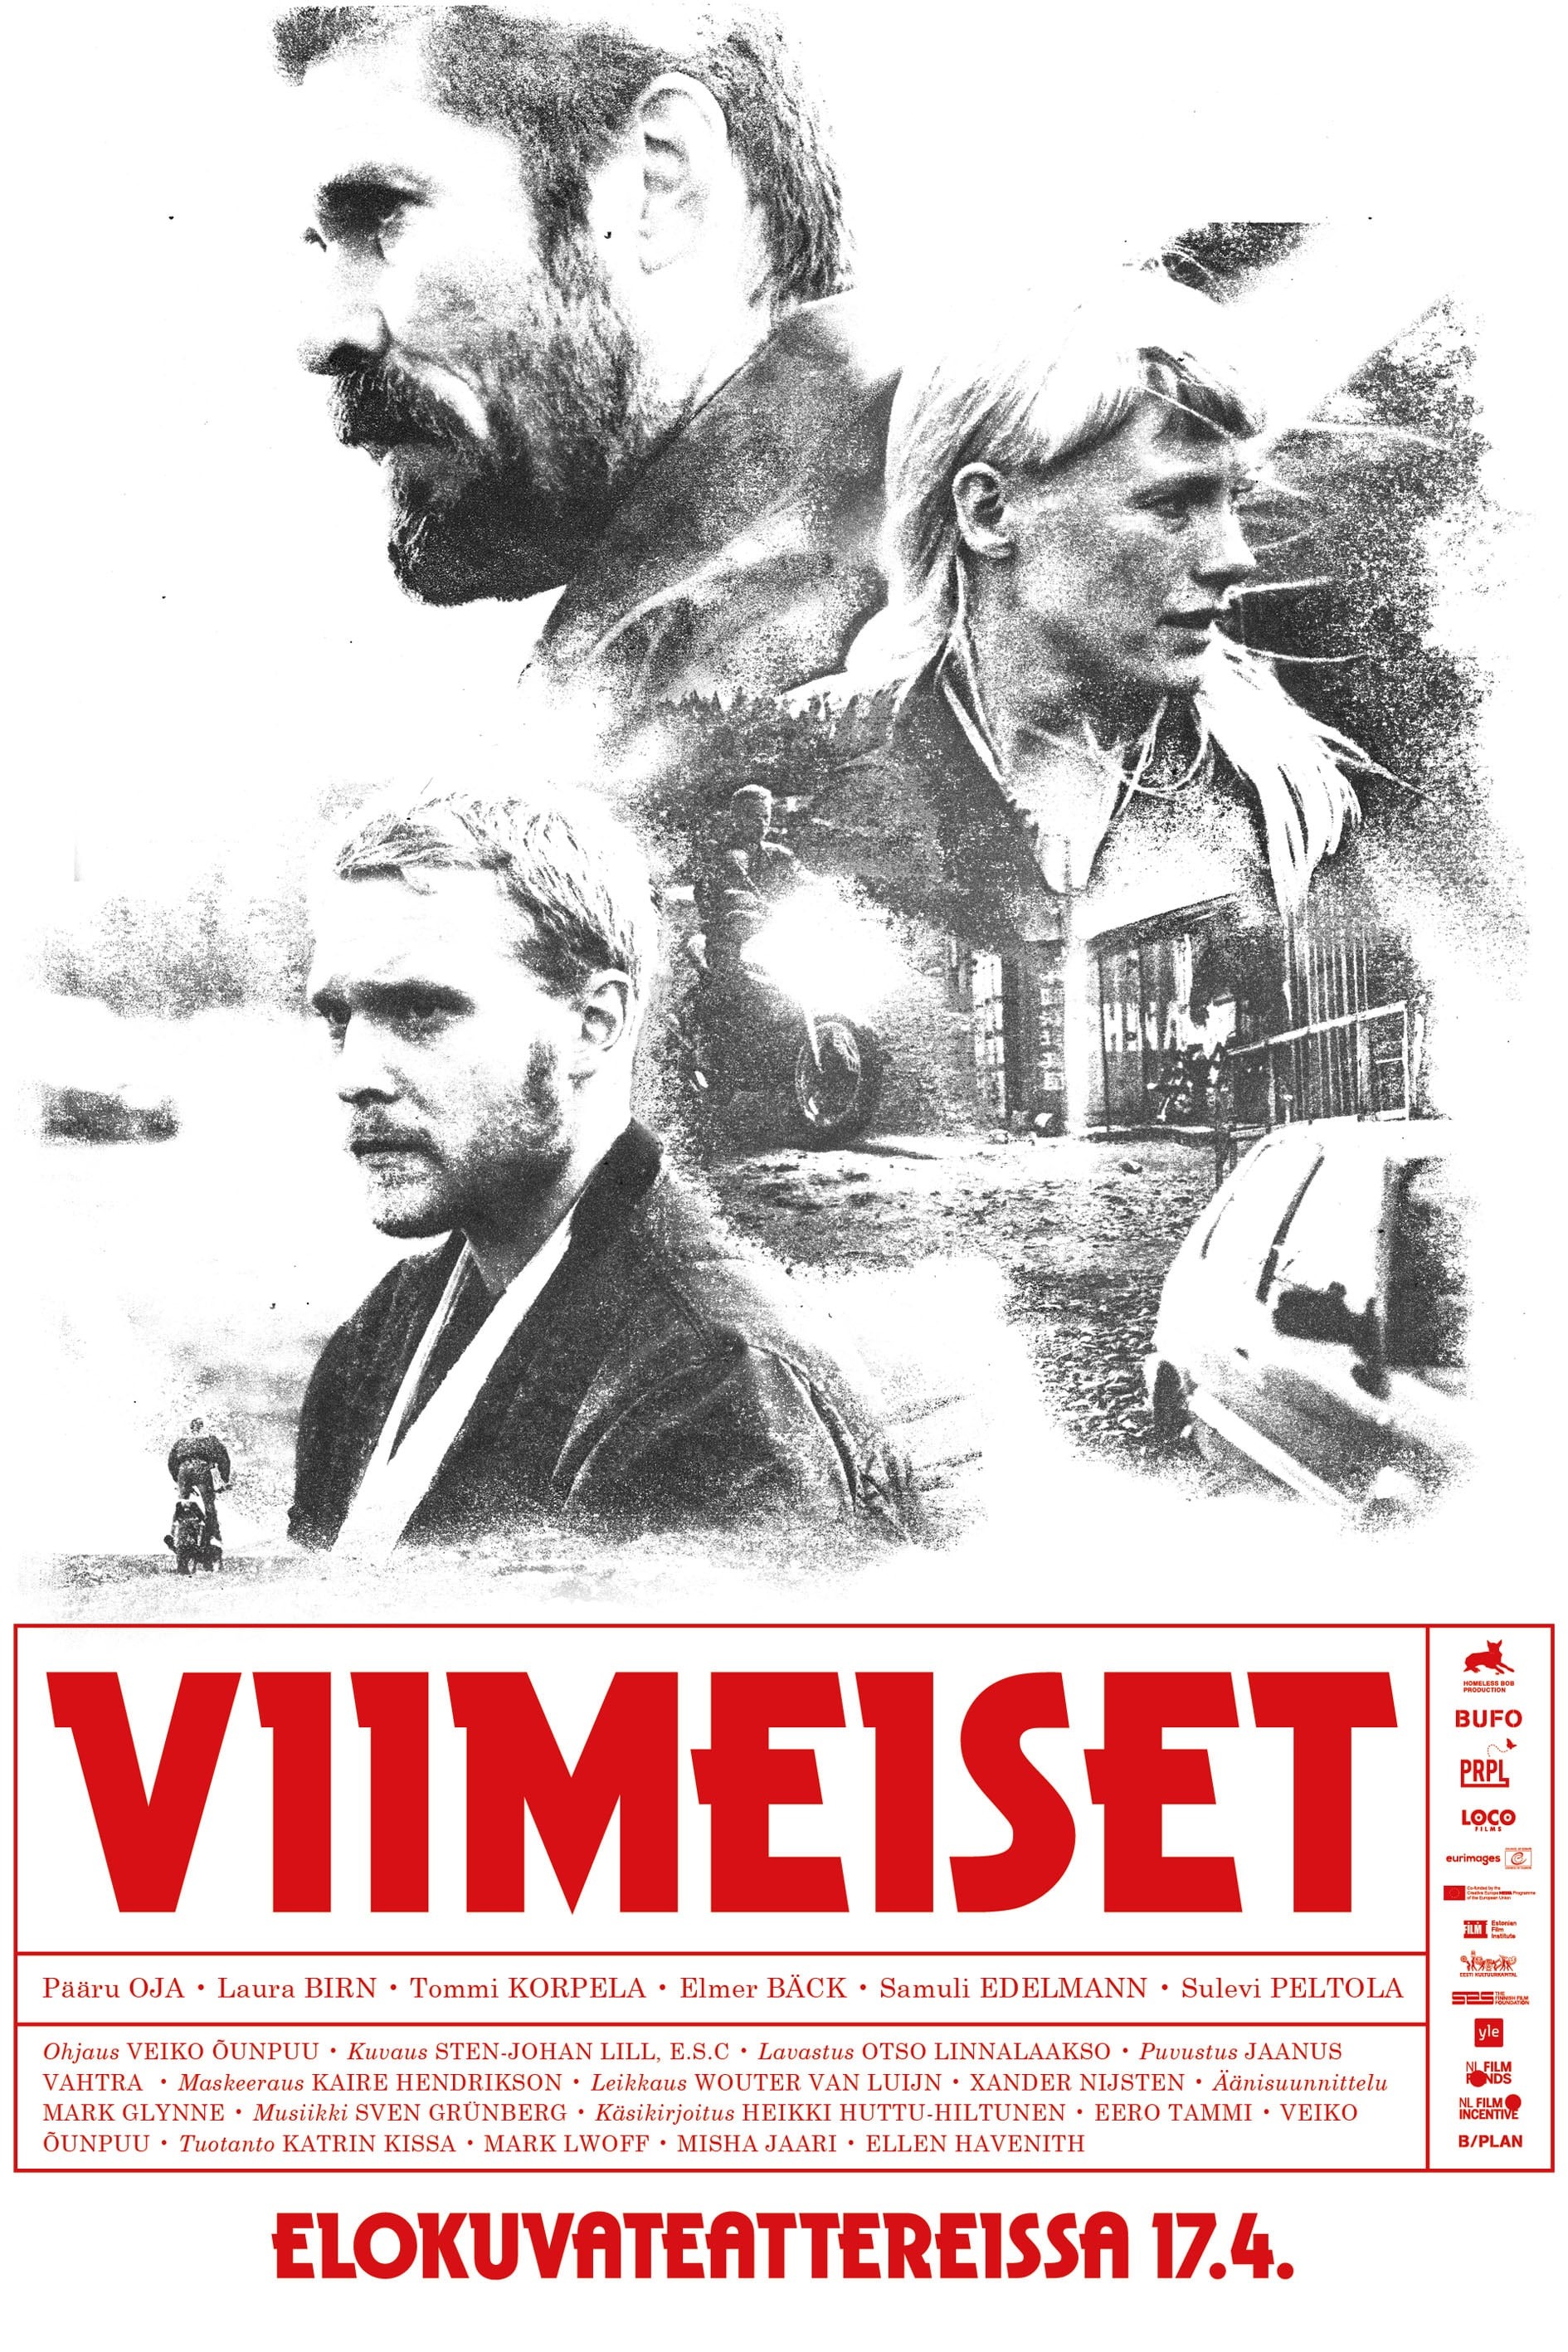 Mega Sized Movie Poster Image for Viimeiset (#2 of 2)